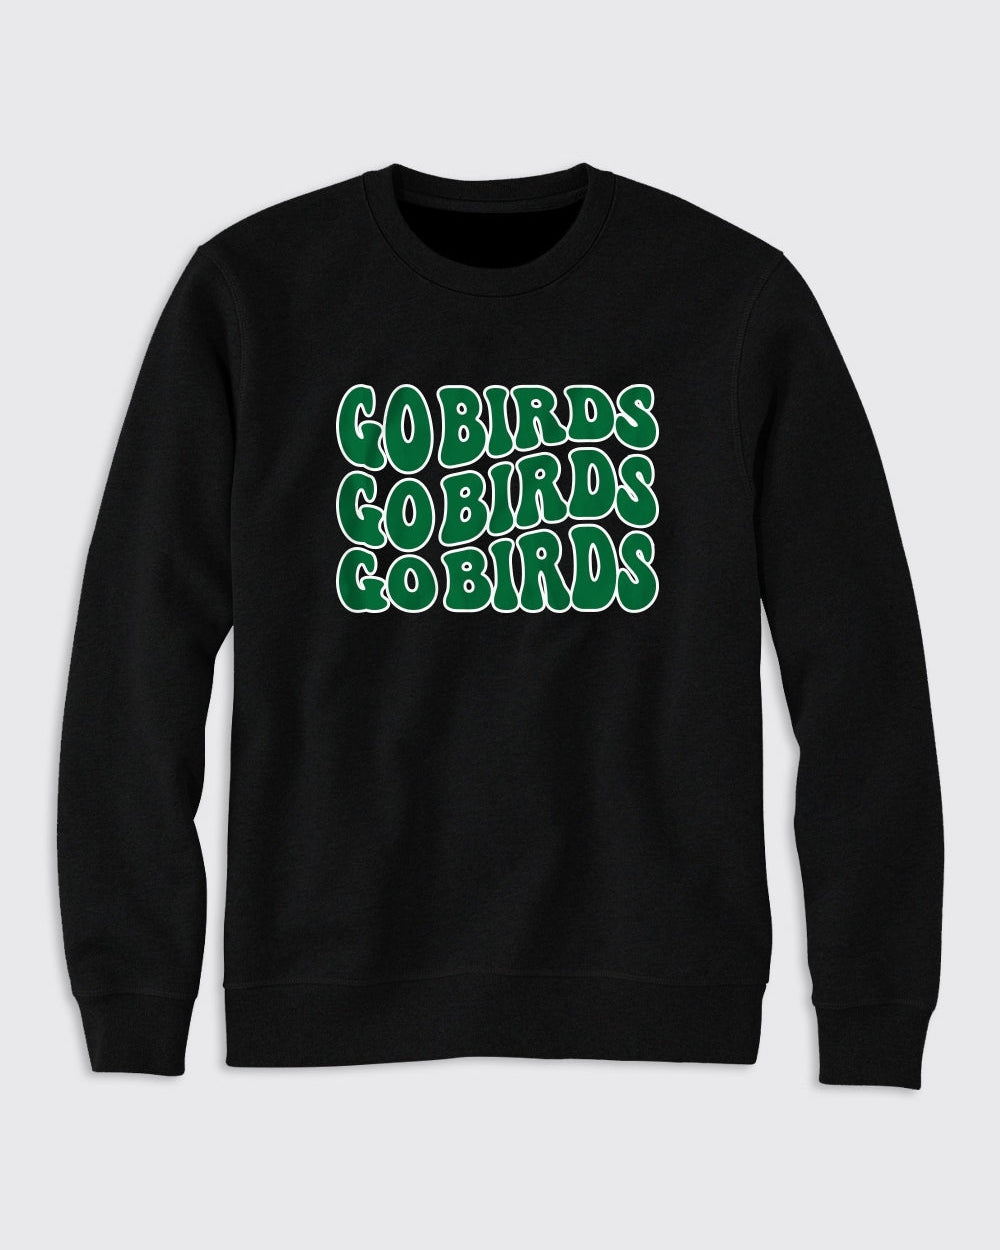 Go Birds Crewneck Sweatshirt - Crewnecks, Eagles - Philly Sports Shirts